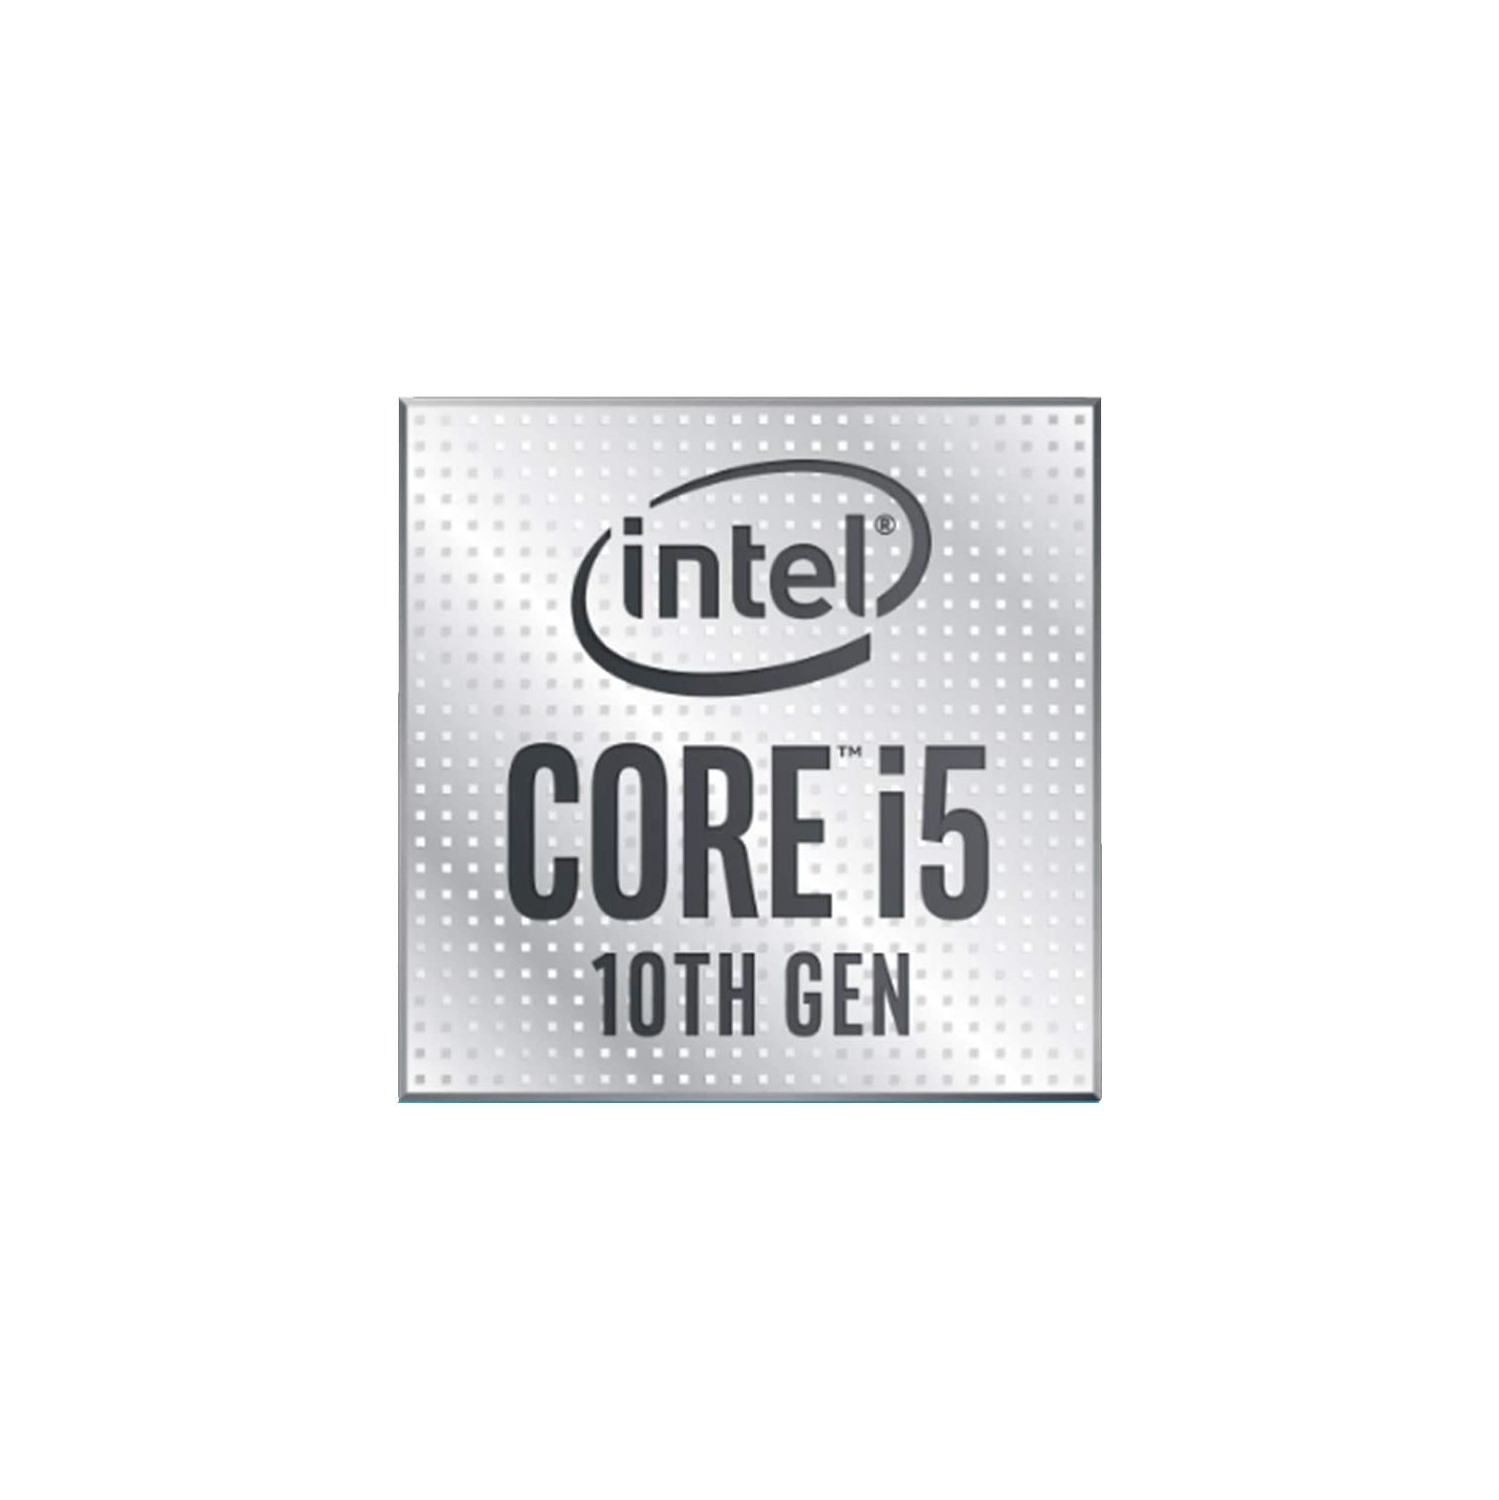 Intel Core i5 10400F @ 3993.16 MHz - CPU-Z VALIDATOR